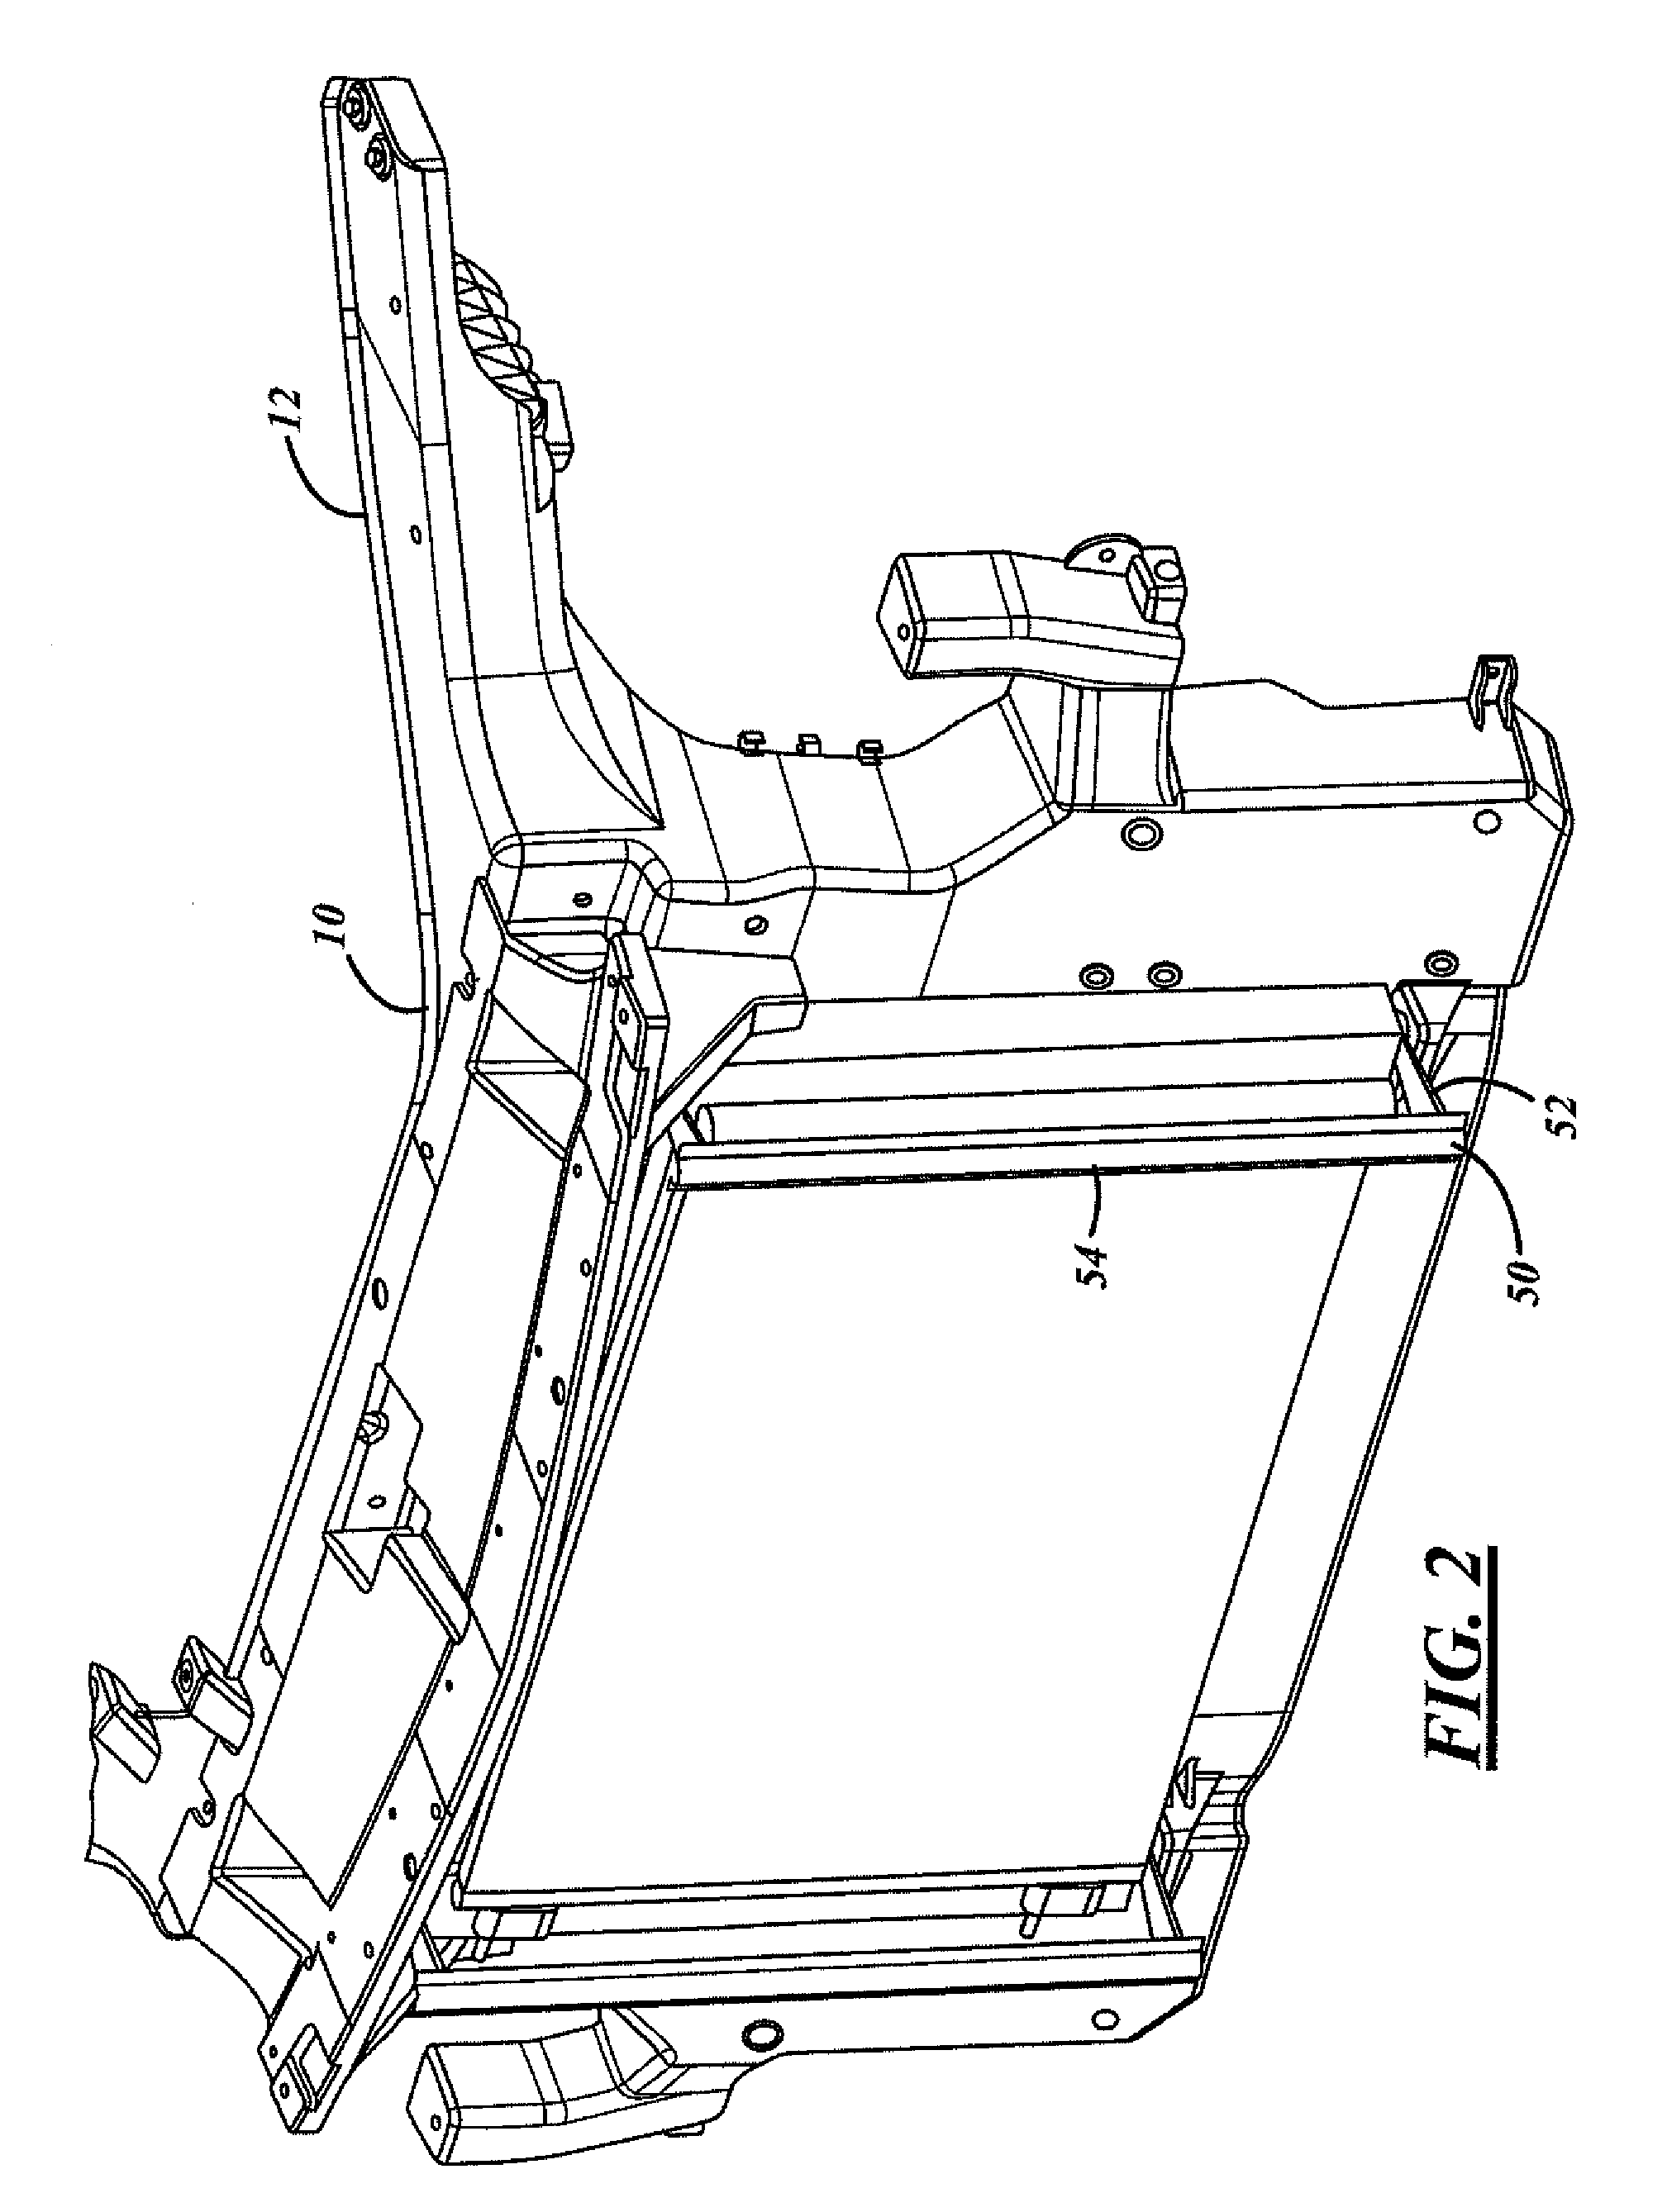 Front end module with breakaway radiator